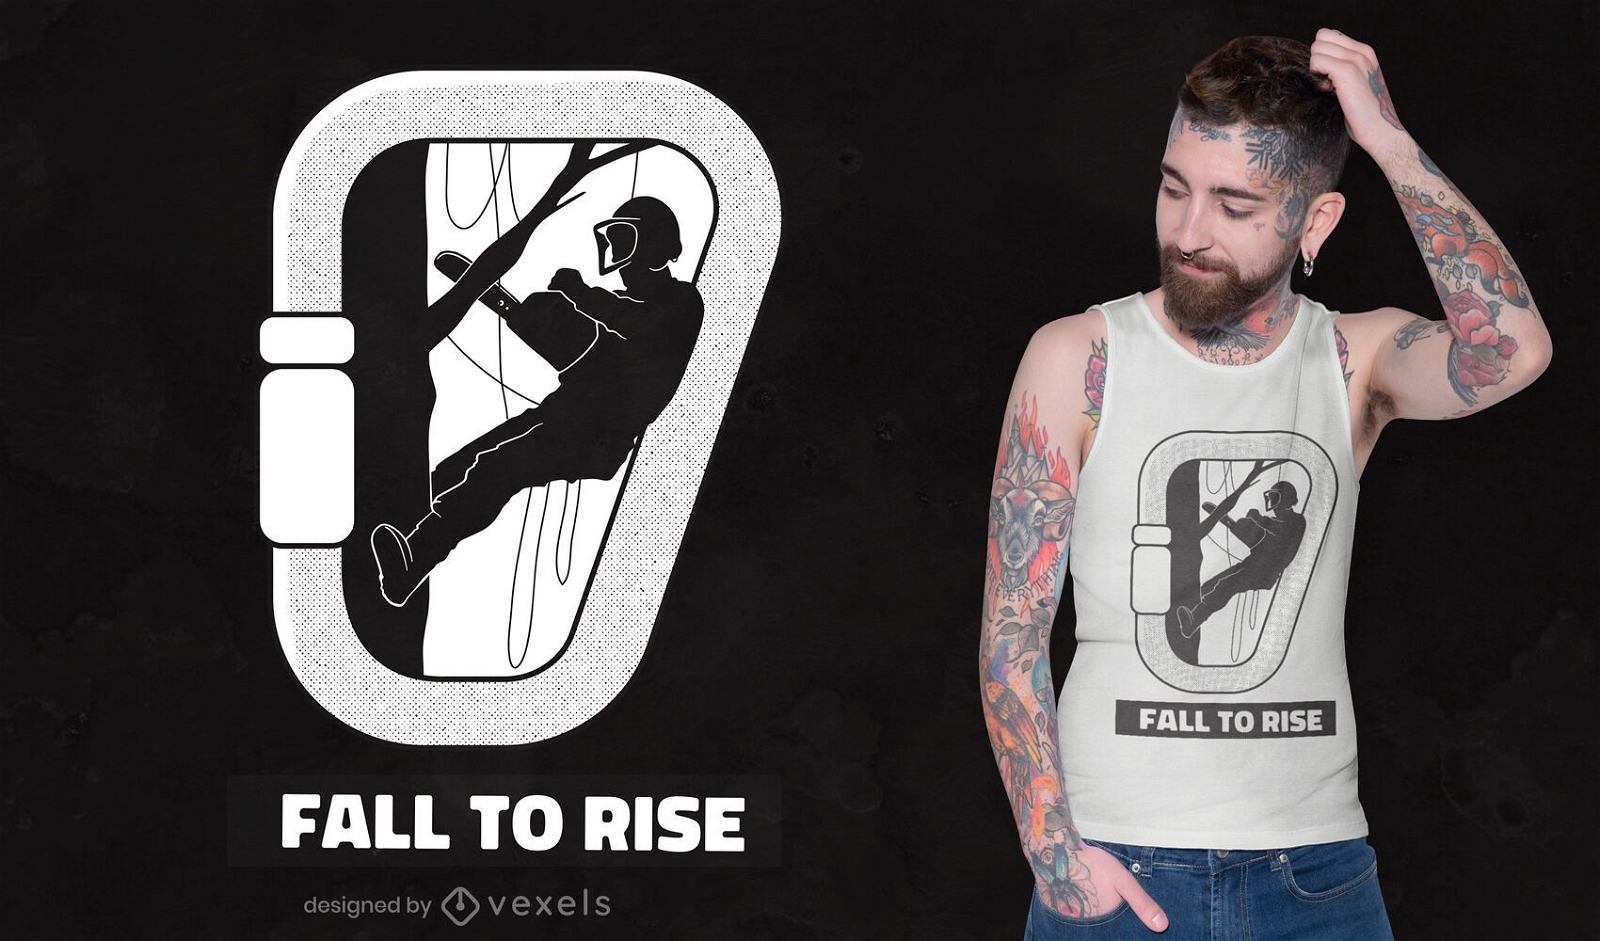 Fall to rise t-shirt design